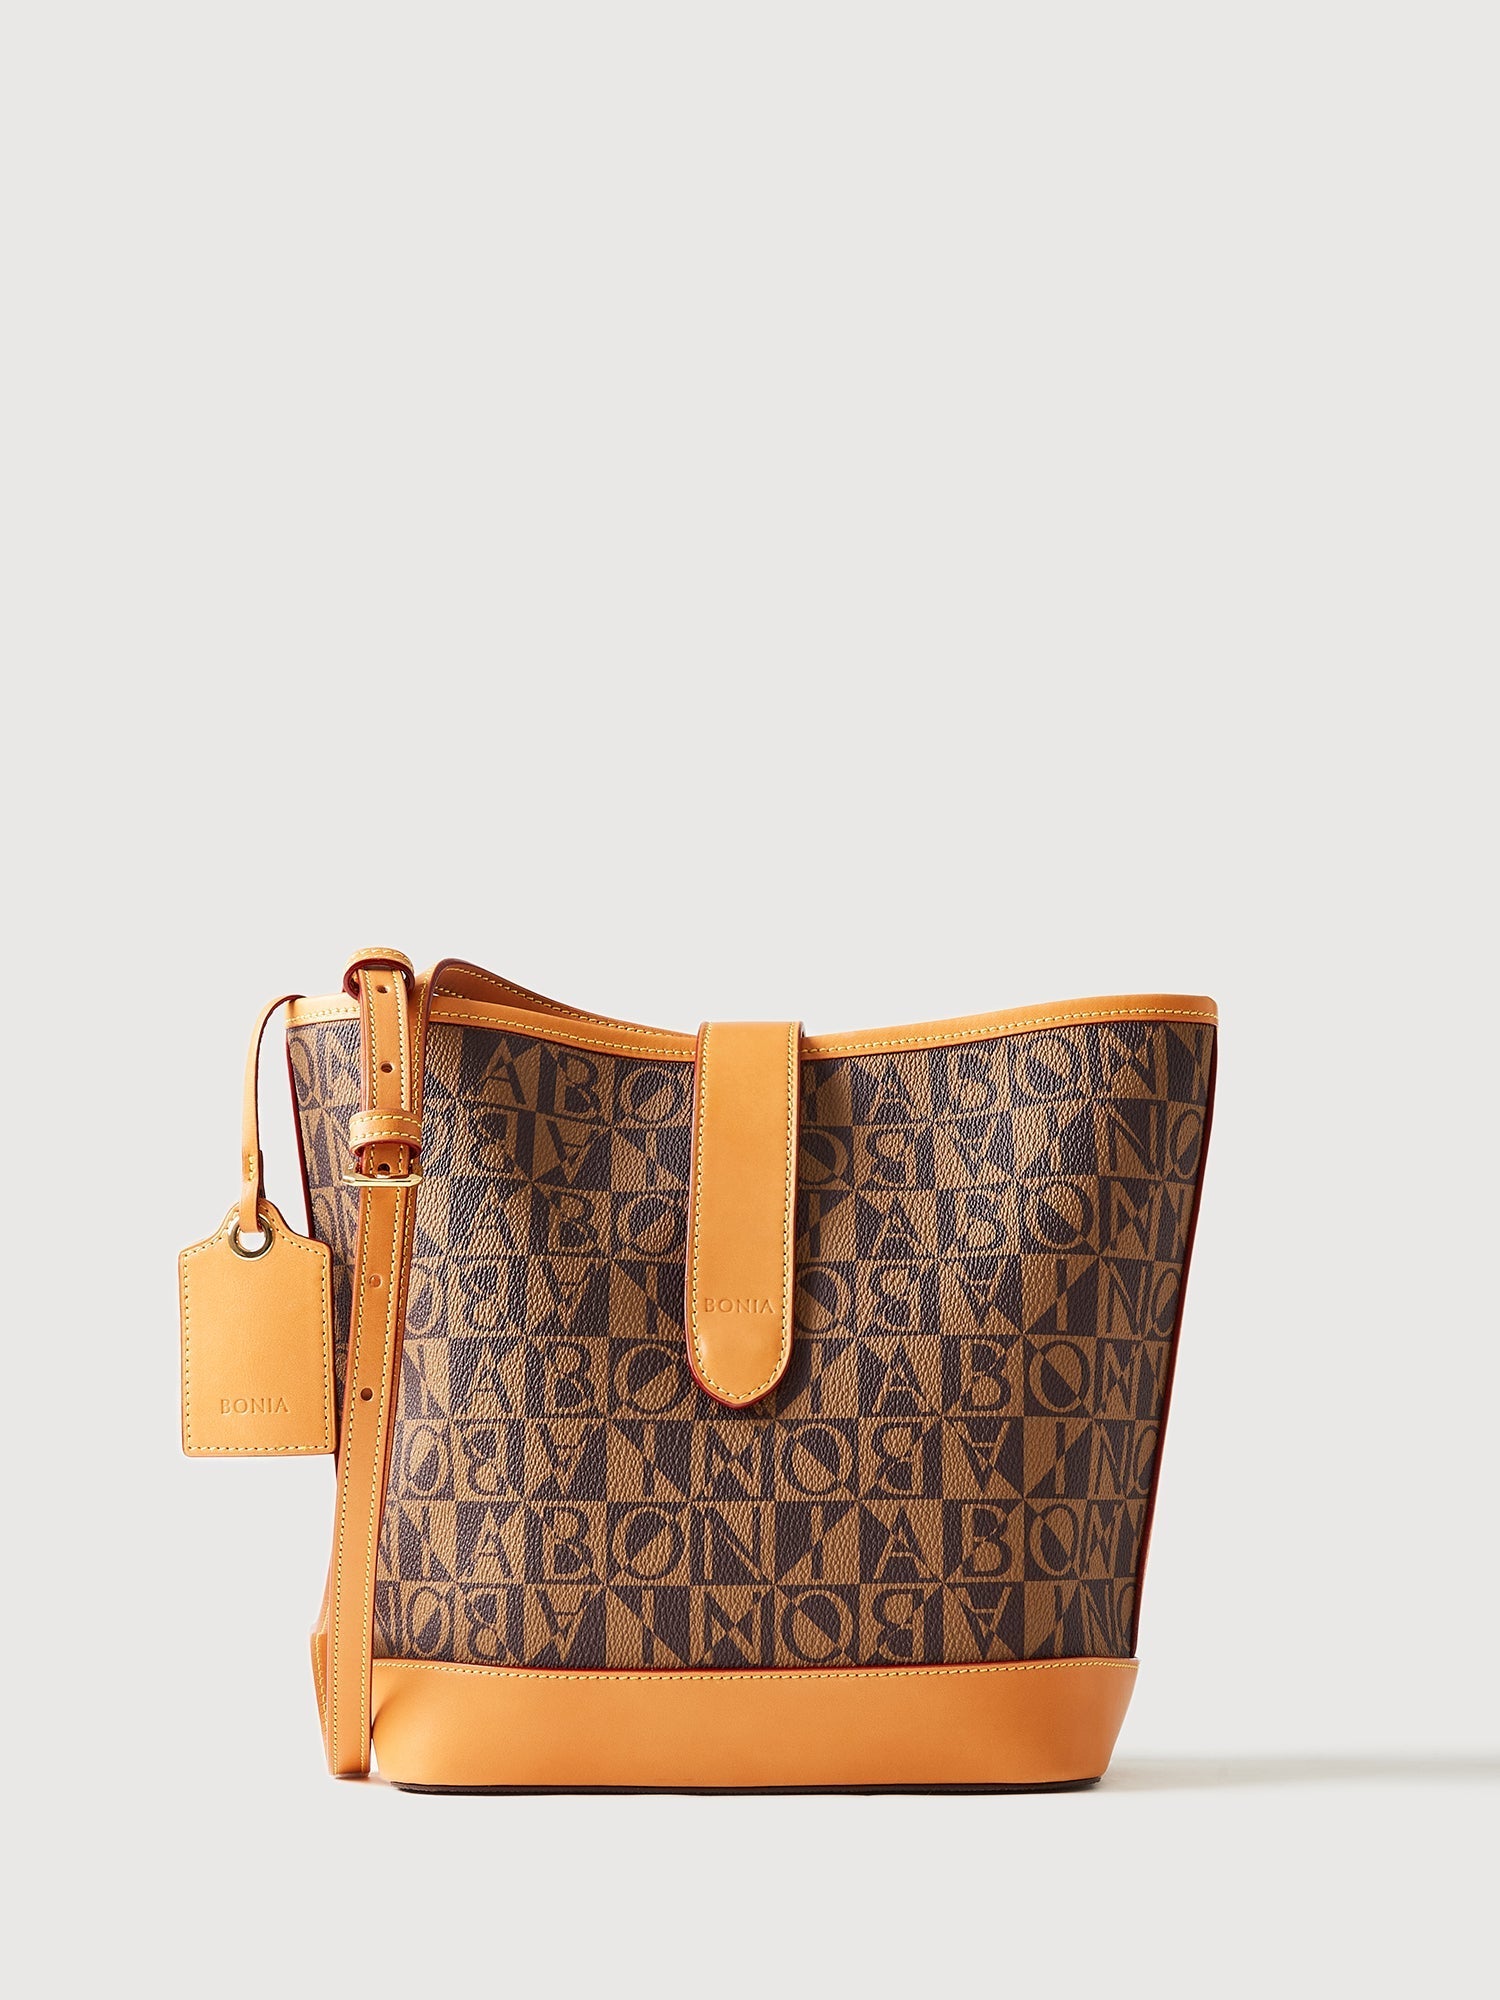 Bonia Leather Handbag